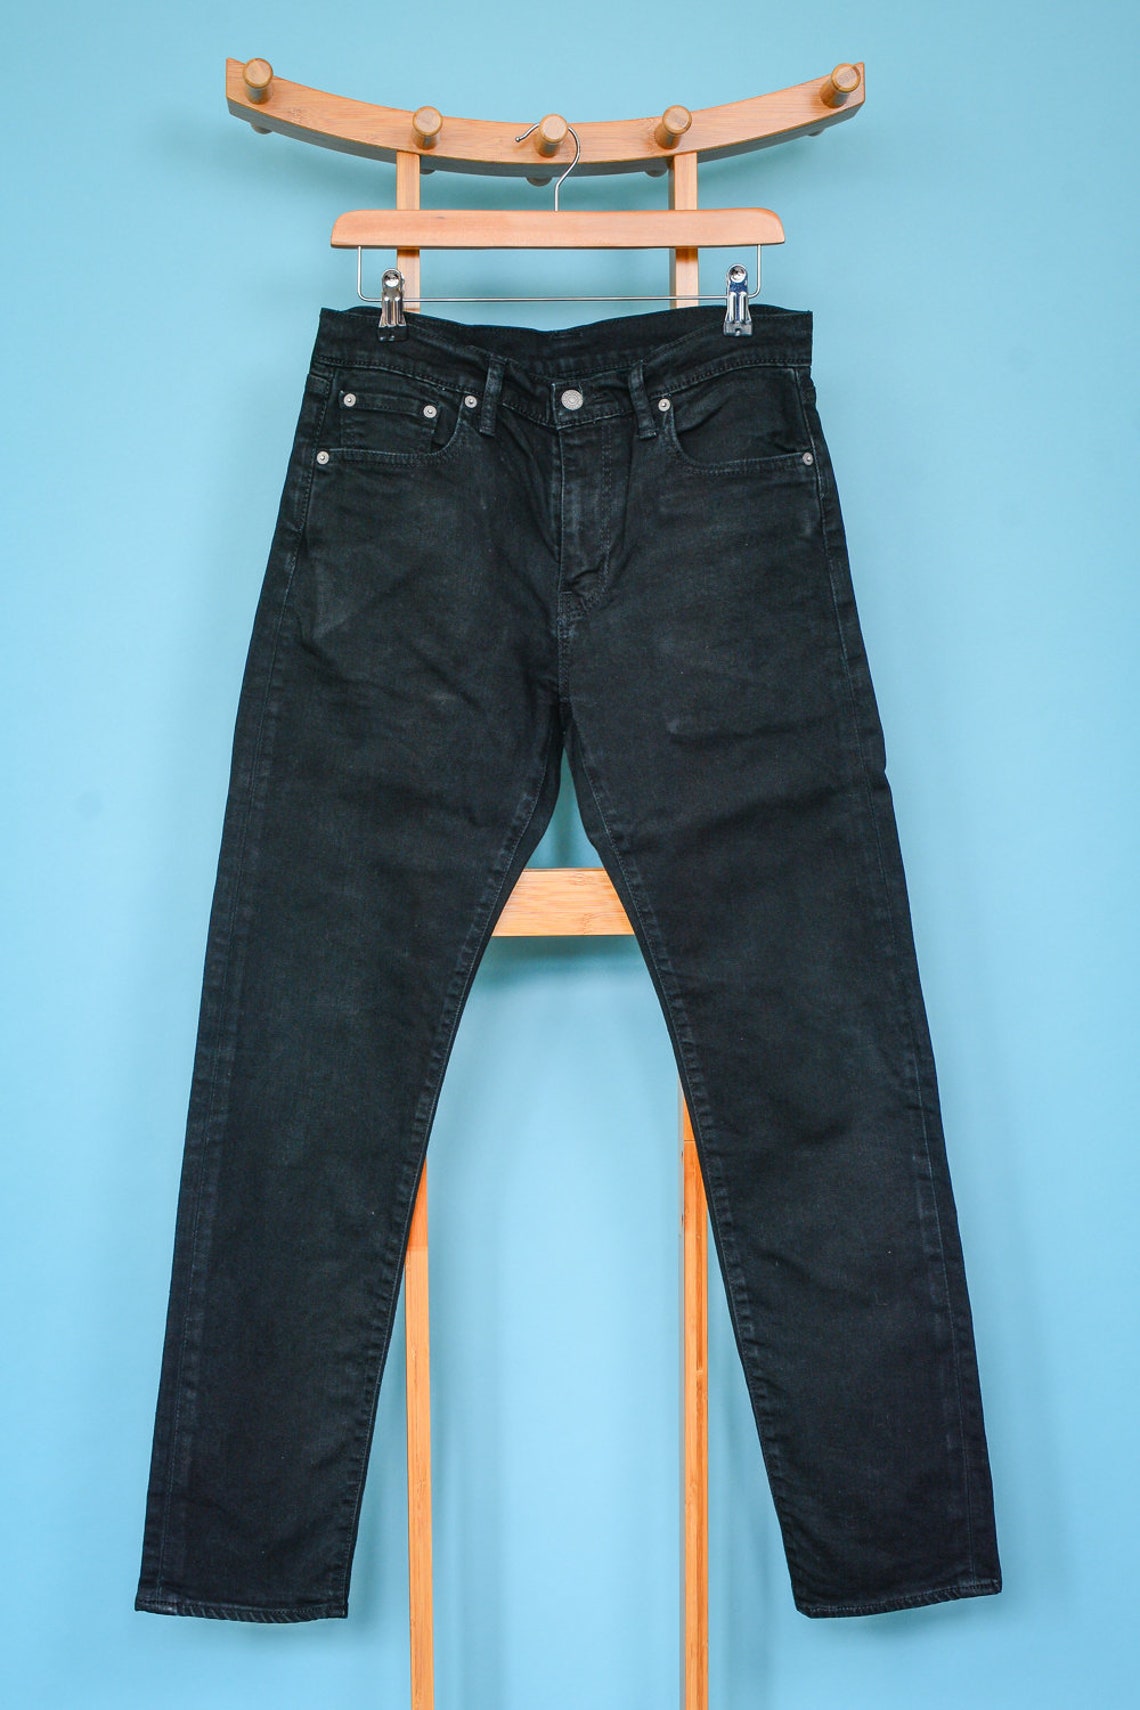 Levi 502 Jeans Black Straight Leg Zip Fly Vintage Men's | Etsy